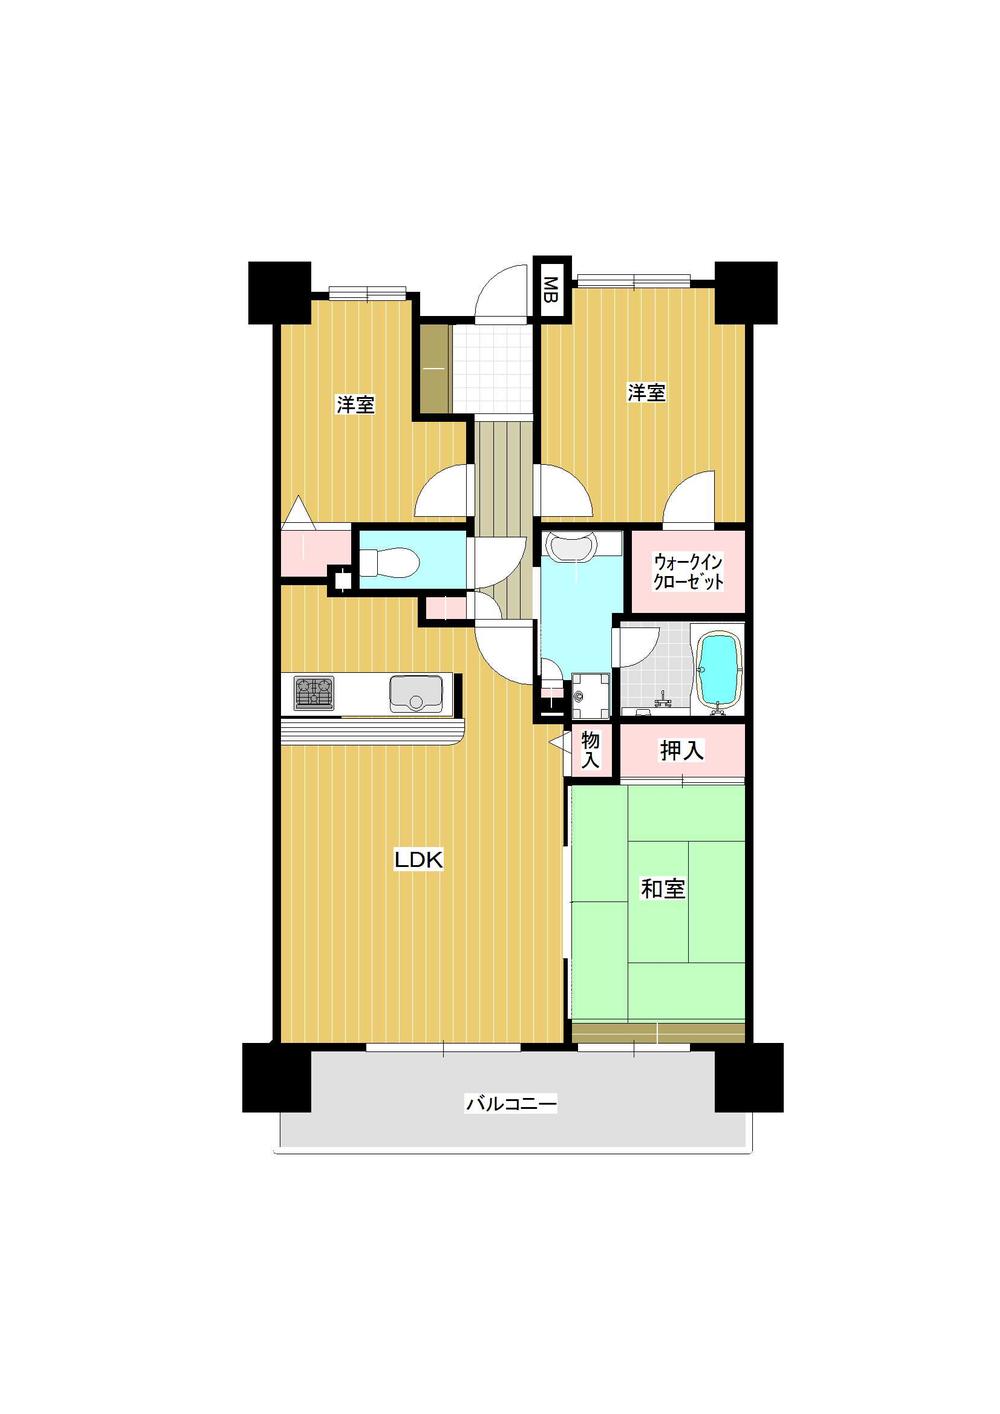 Floor plan. 3LDK, Price 25,800,000 yen, Footprint 78 sq m , Balcony area 13.8 sq m